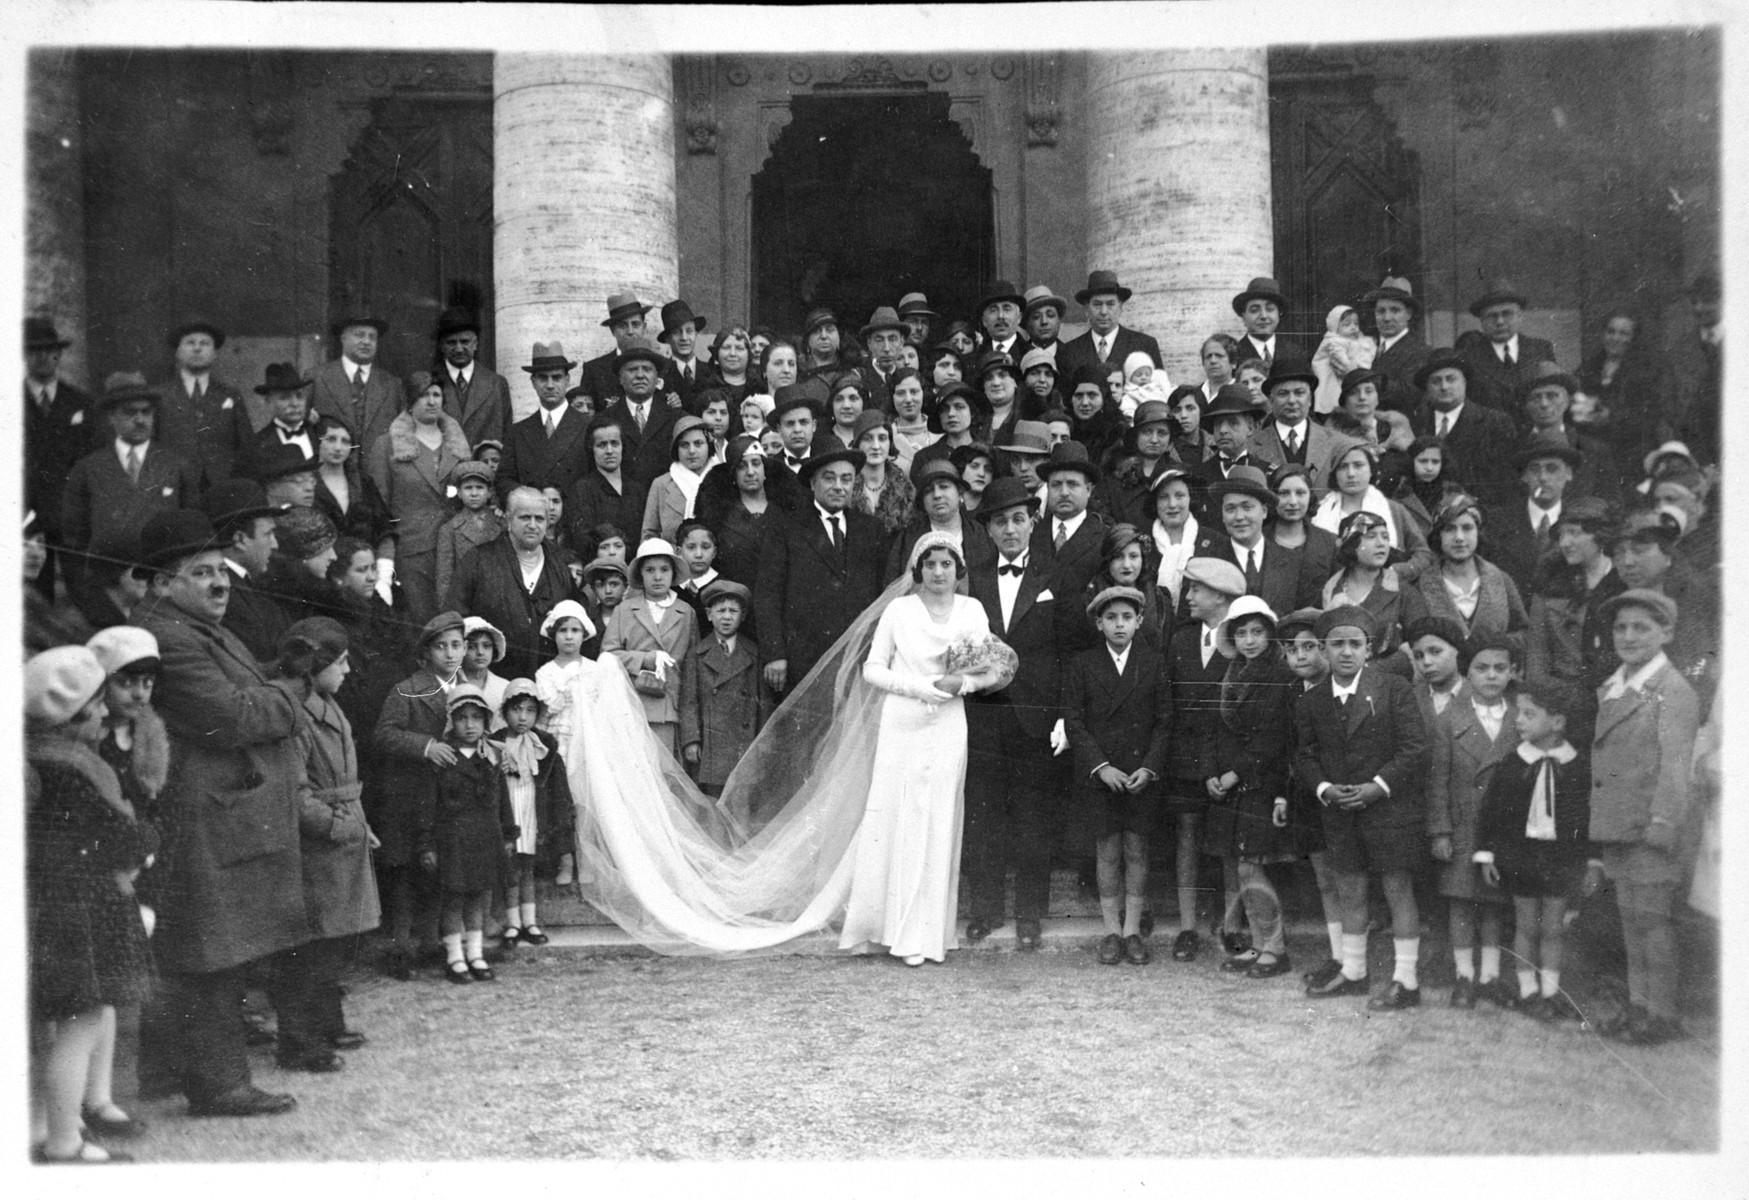 Wedding portrait of Aurelio Spagnoletto and Laura Caviglia.

Aurelio was deported to Germany on February 3, 1944.